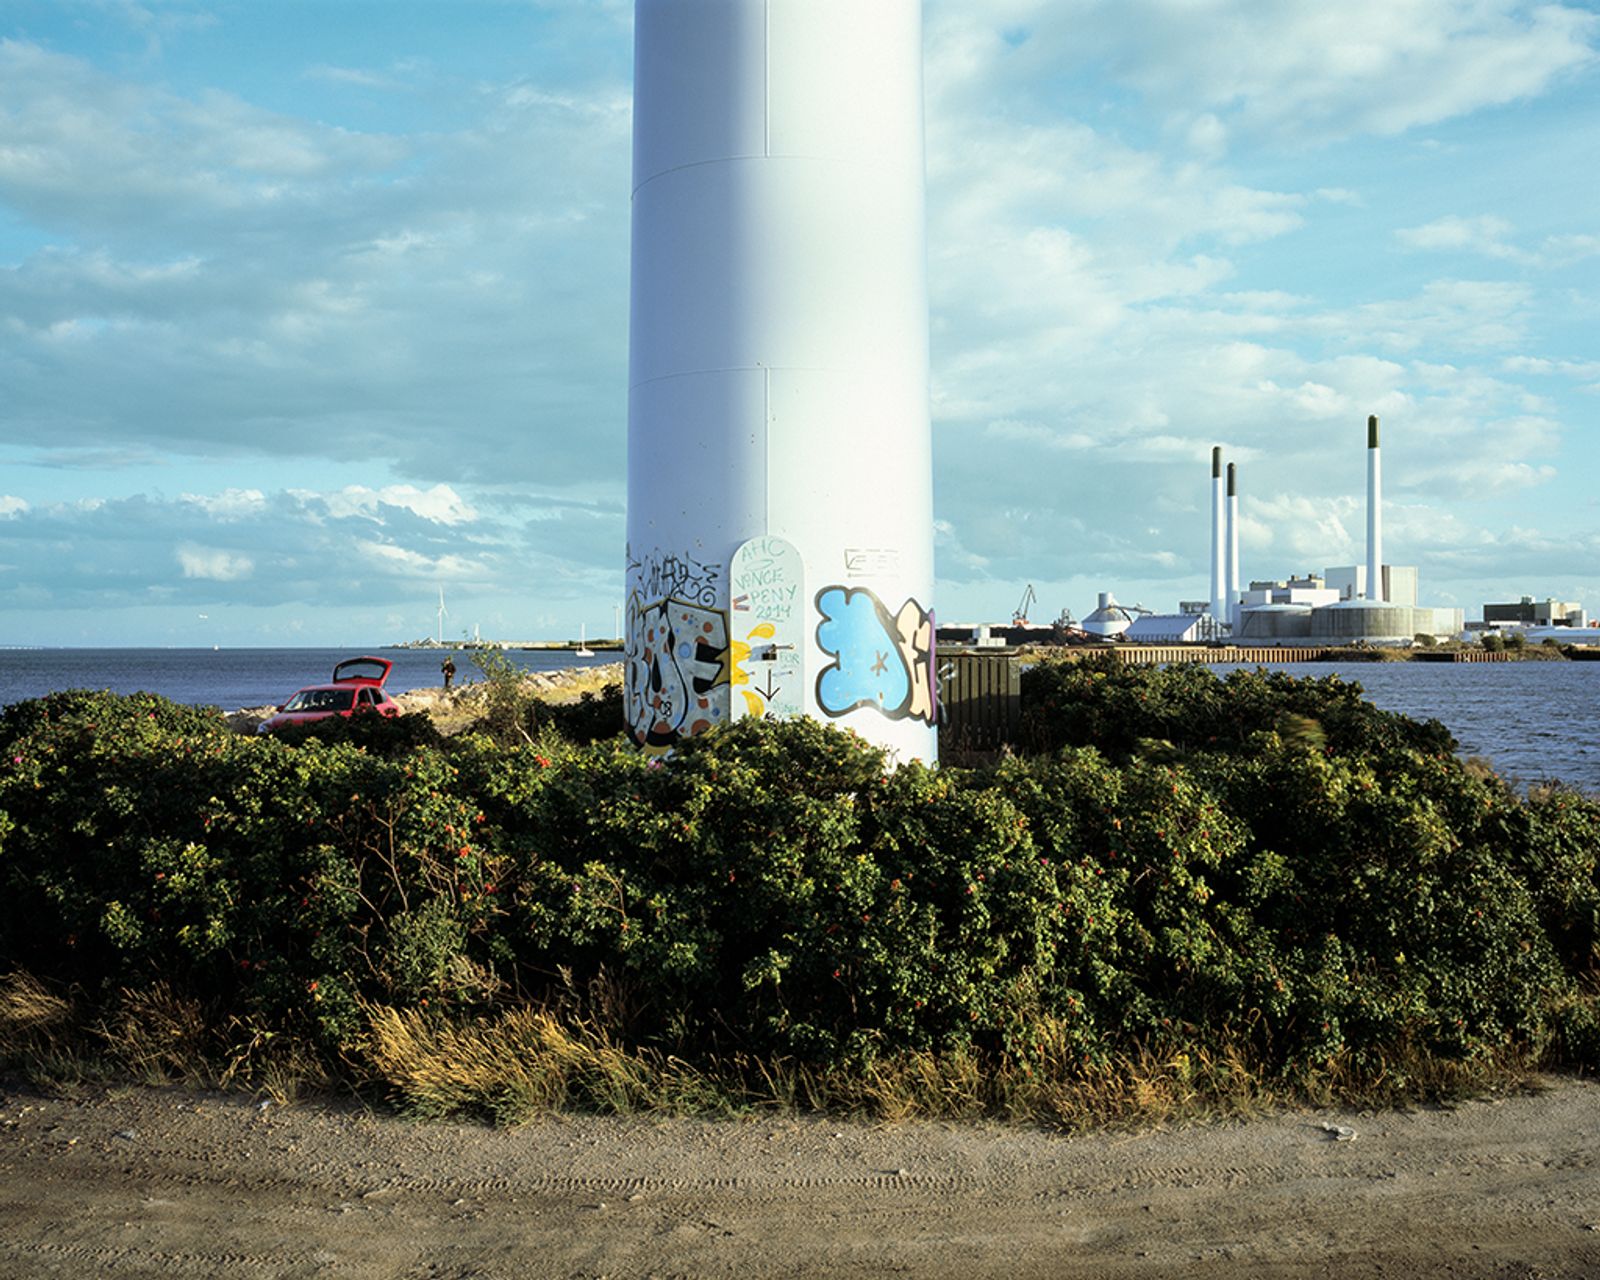 © Bryan Steiff - Graffittied Turbine, Refshalevej, Copenhagen, Denmark, 2014